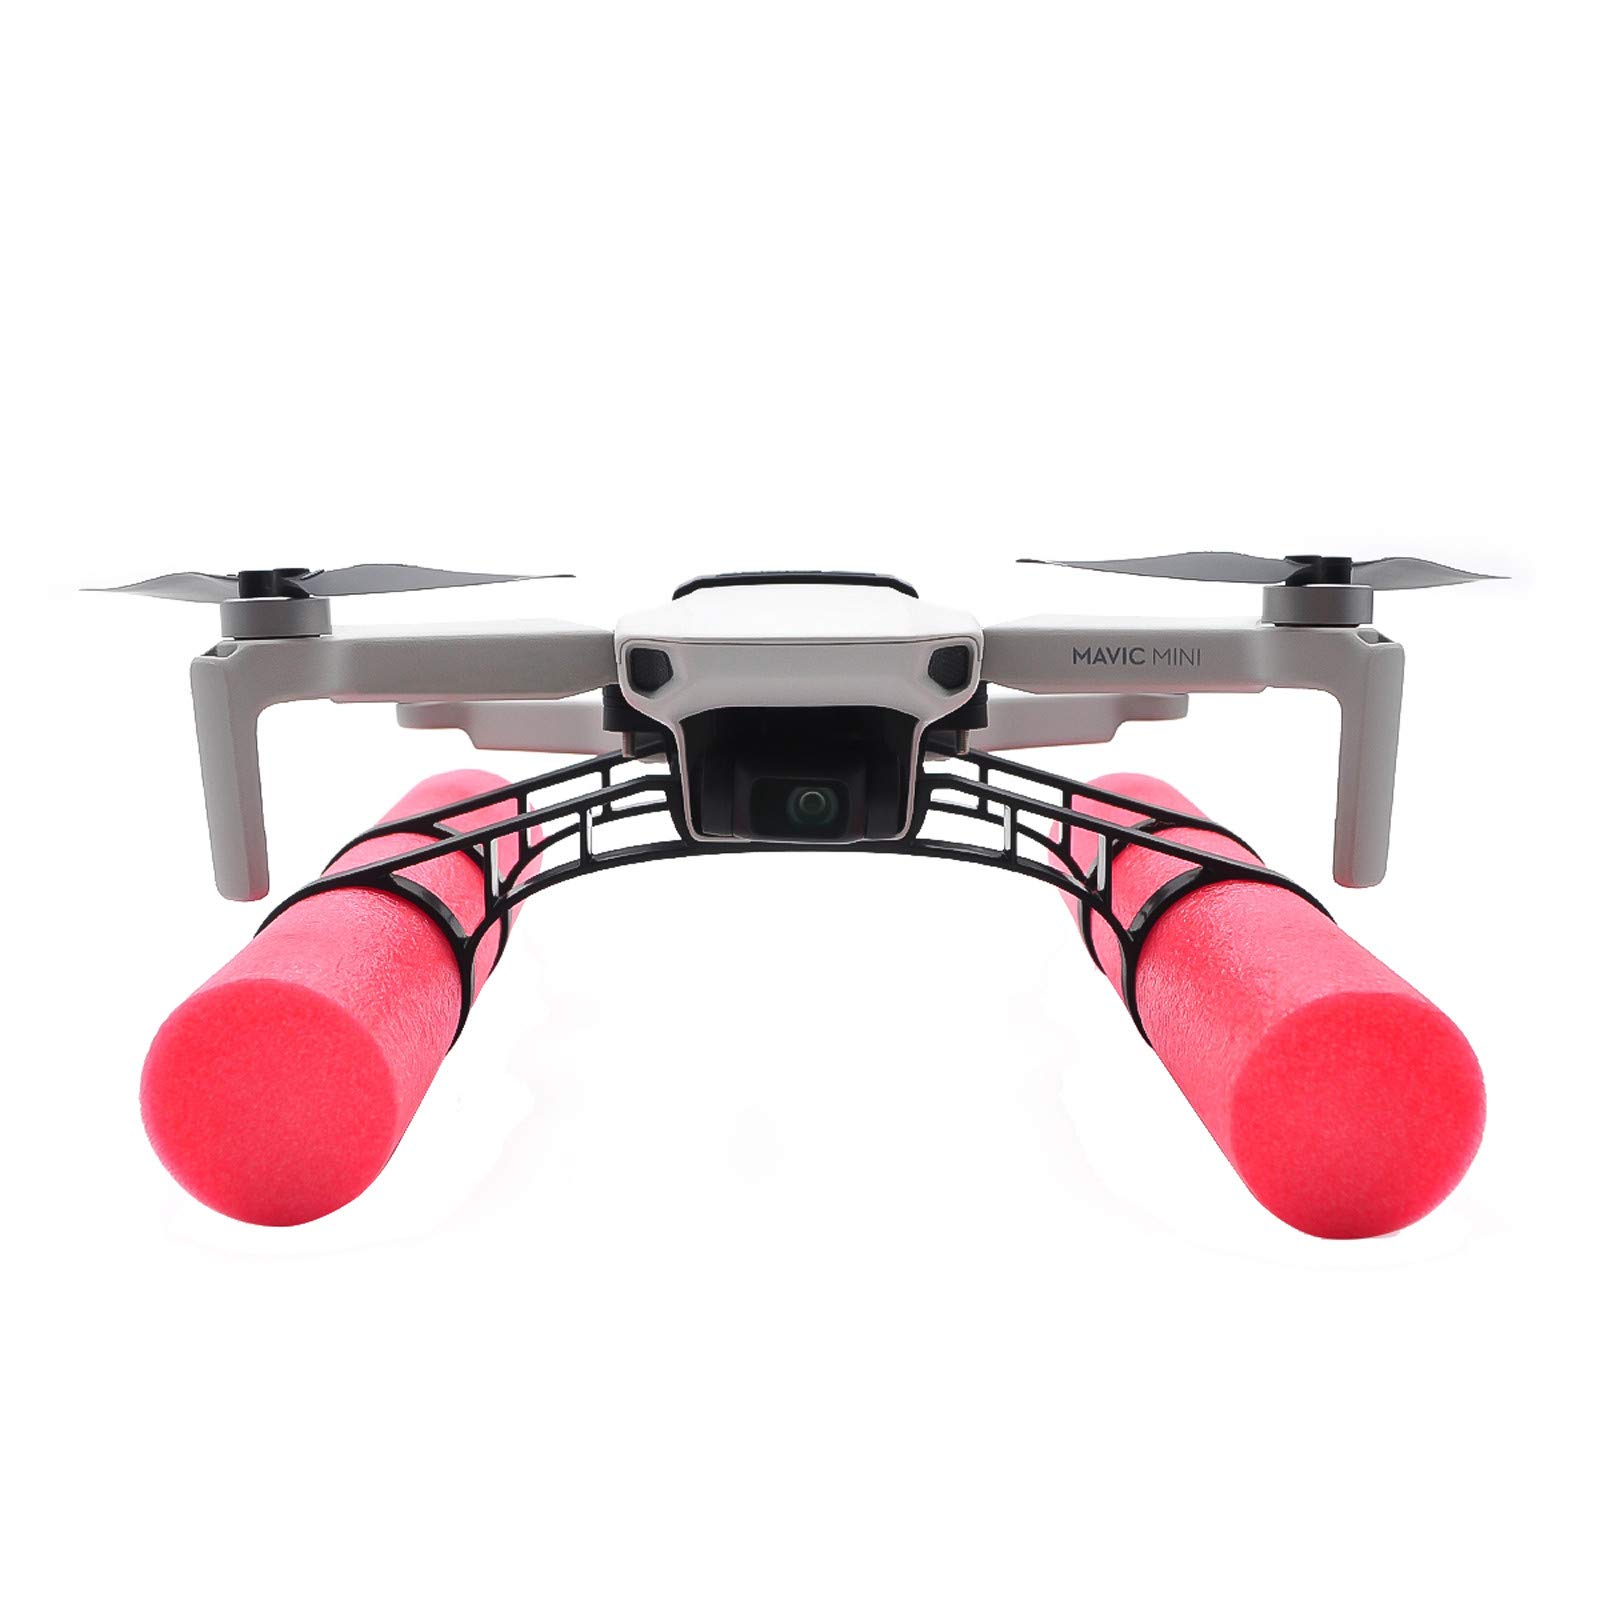 USIRIY Landegestell für DJI Mini 2 RC Drone Damping Landing Gear Training Kit Schwimmender Halter für DJI Mavic Mini 2 GPS Drohne (Rot) von USIRIY